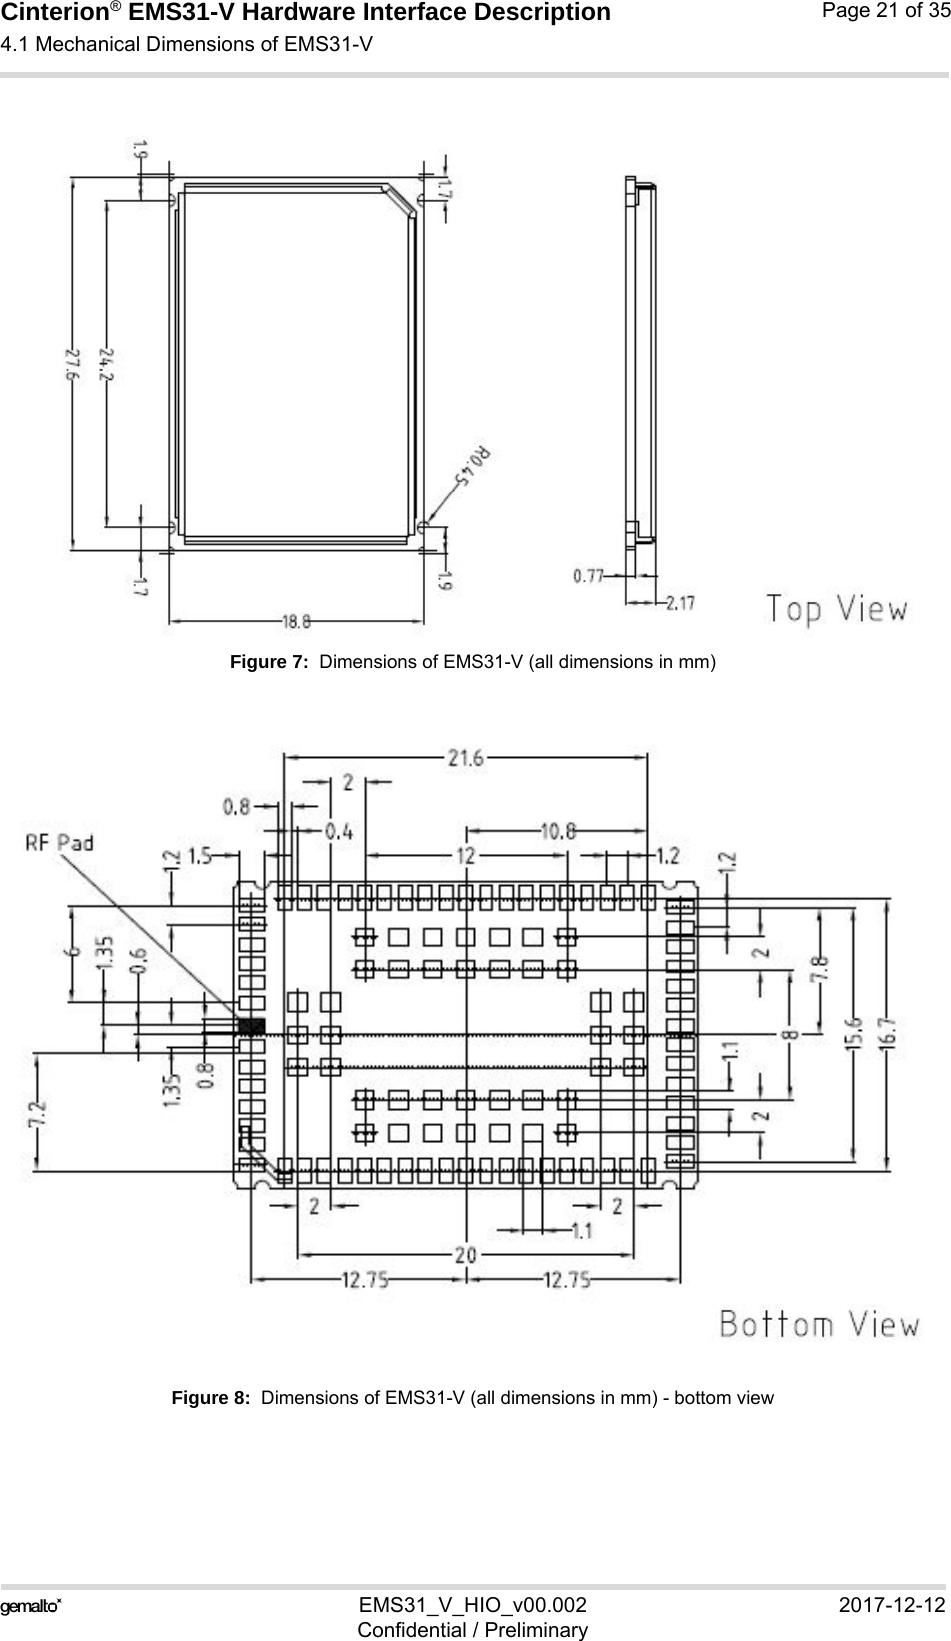 Cinterion® EMS31-V Hardware Interface Description4.1 Mechanical Dimensions of EMS31-V21EMS31_V_HIO_v00.002 2017-12-12Confidential / PreliminaryPage 21 of 35Figure 7:  Dimensions of EMS31-V (all dimensions in mm)Figure 8:  Dimensions of EMS31-V (all dimensions in mm) - bottom view